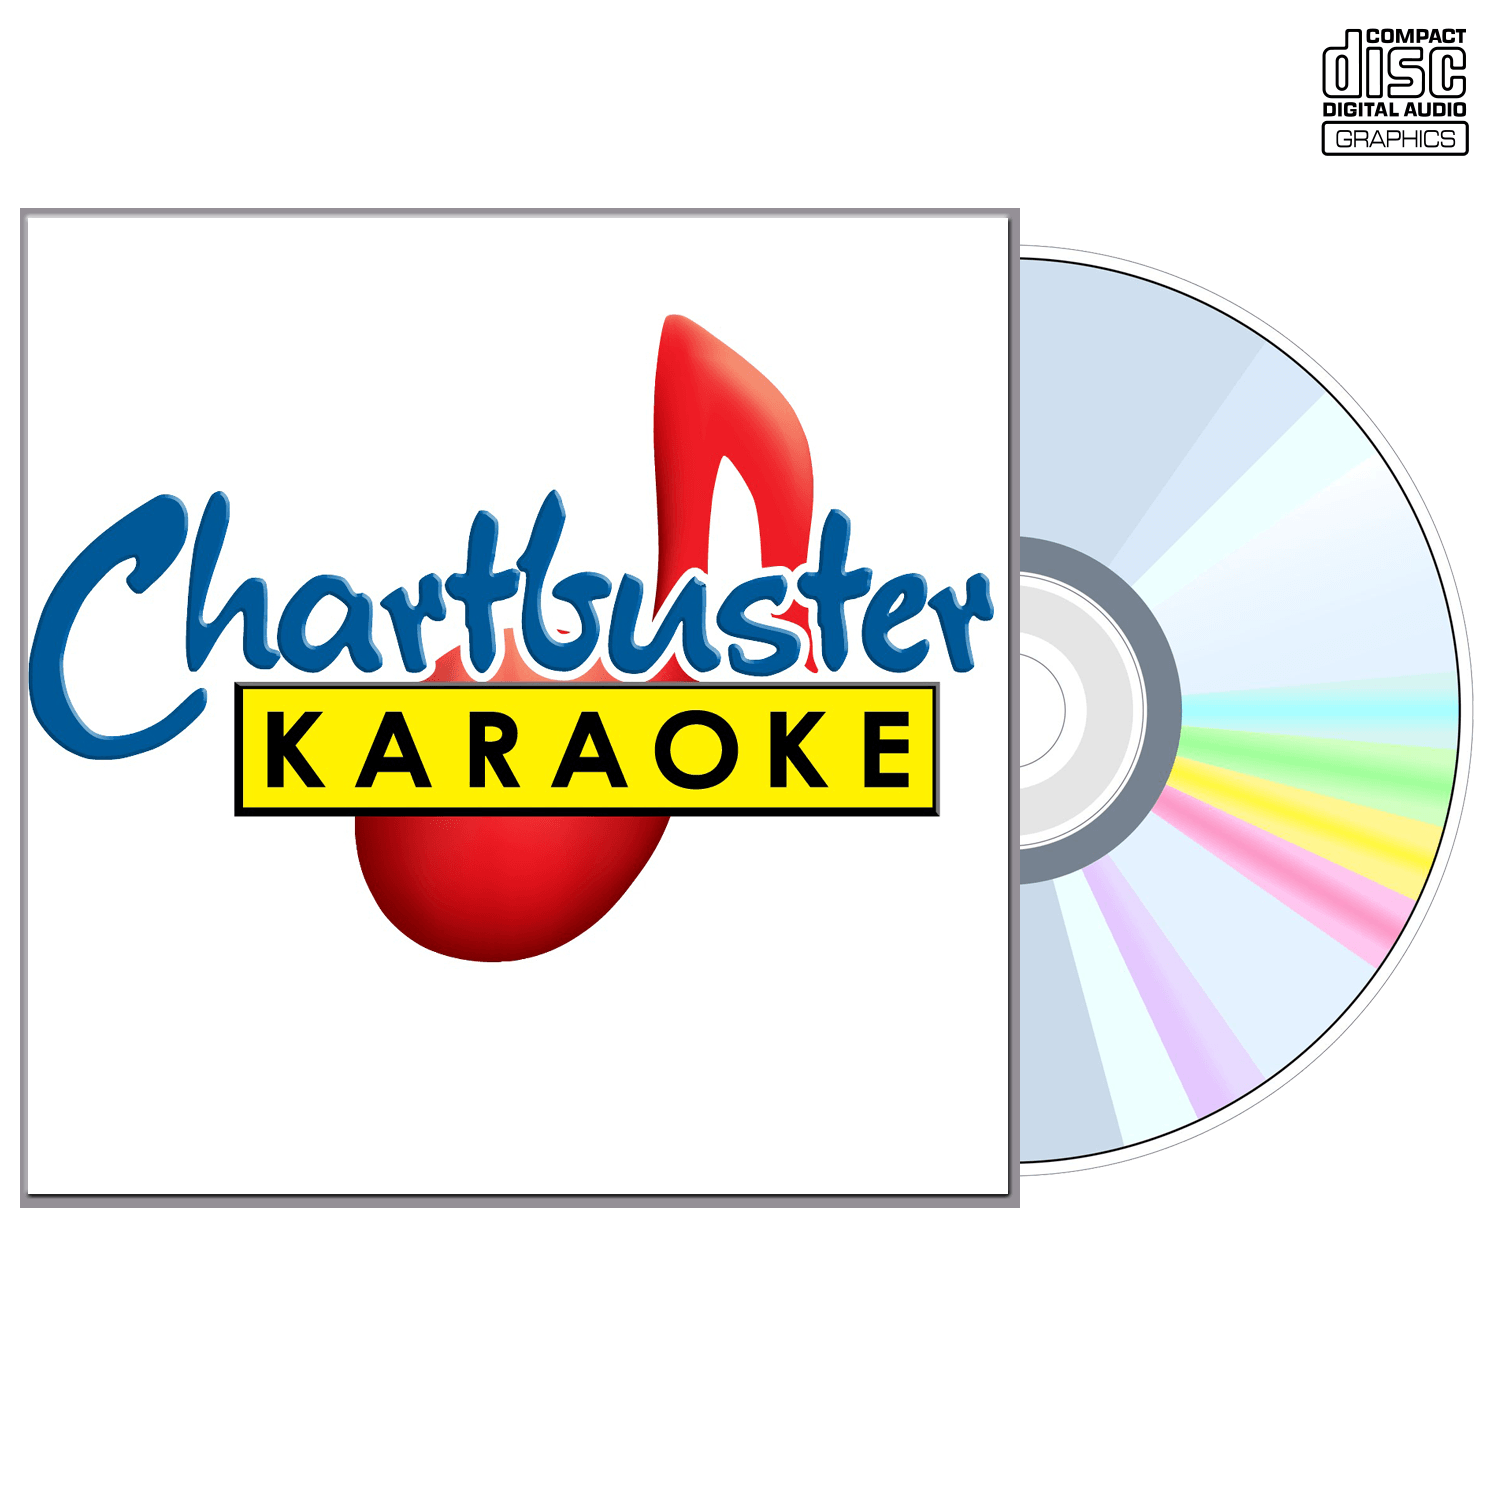 Joe Diffie Vol 2 - CD+G - Chartbuster Karaoke - Karaoke Home Entertainment